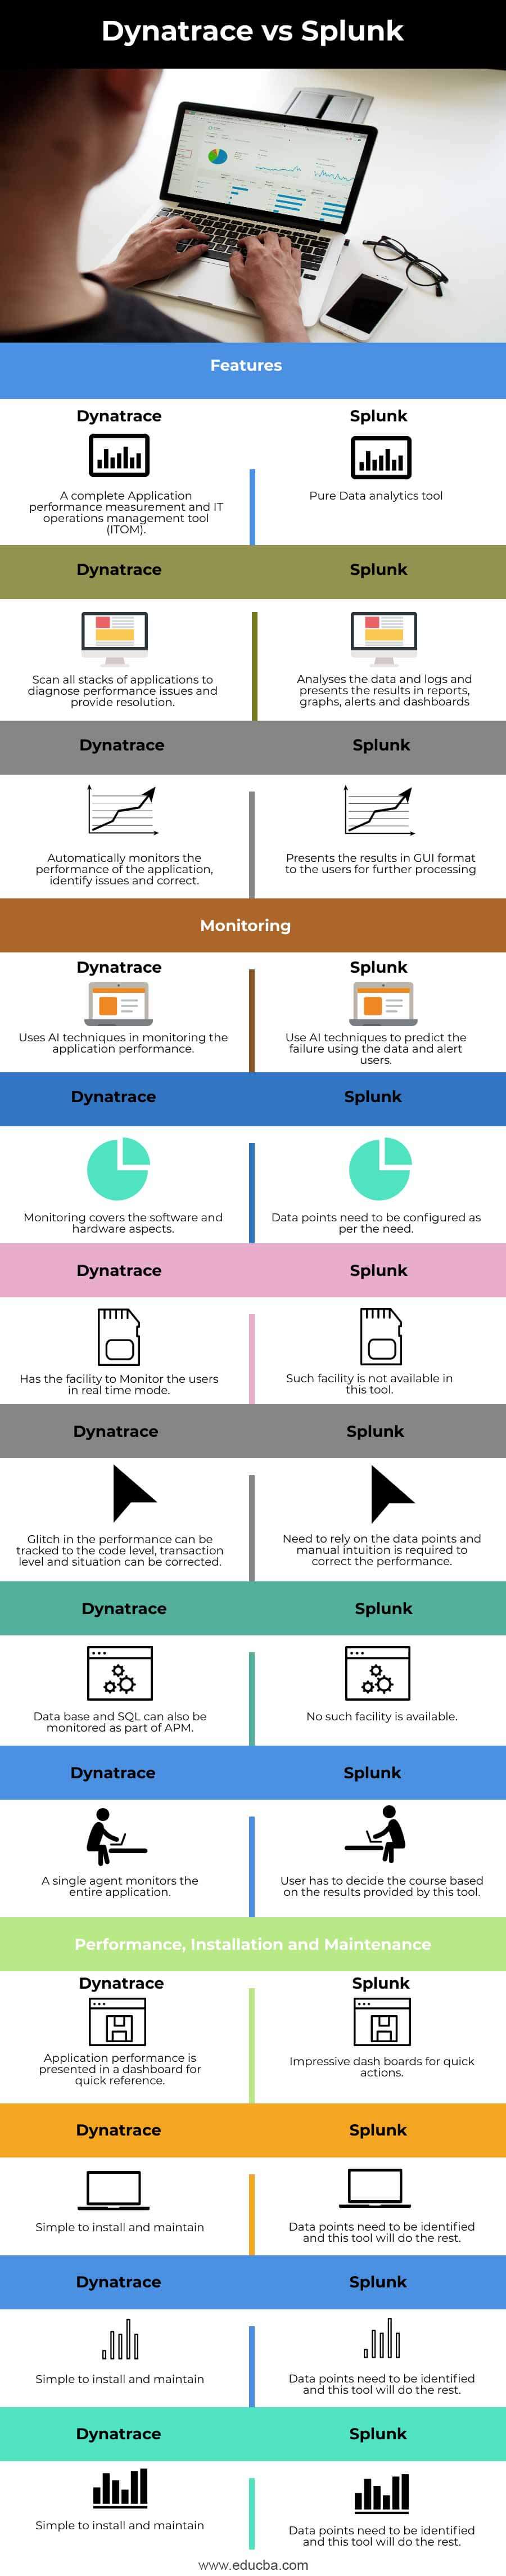 Dynatrace-vs-Splunk-info